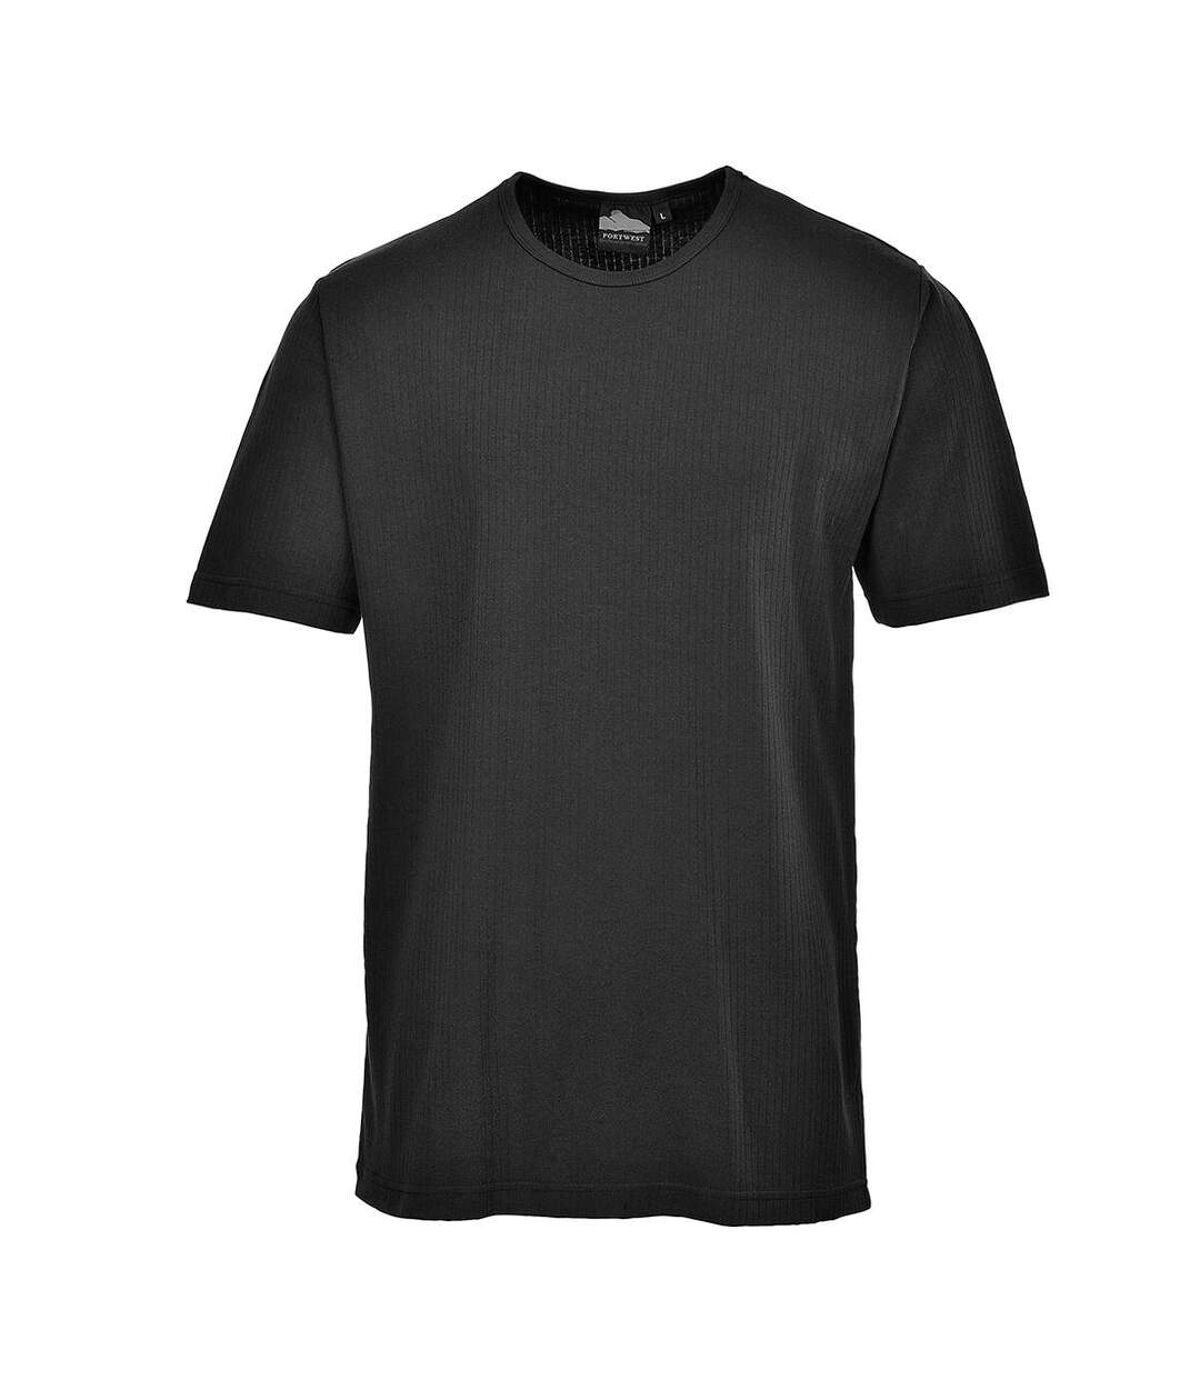 Portwest Mens Thermal T-Shirt (Black)